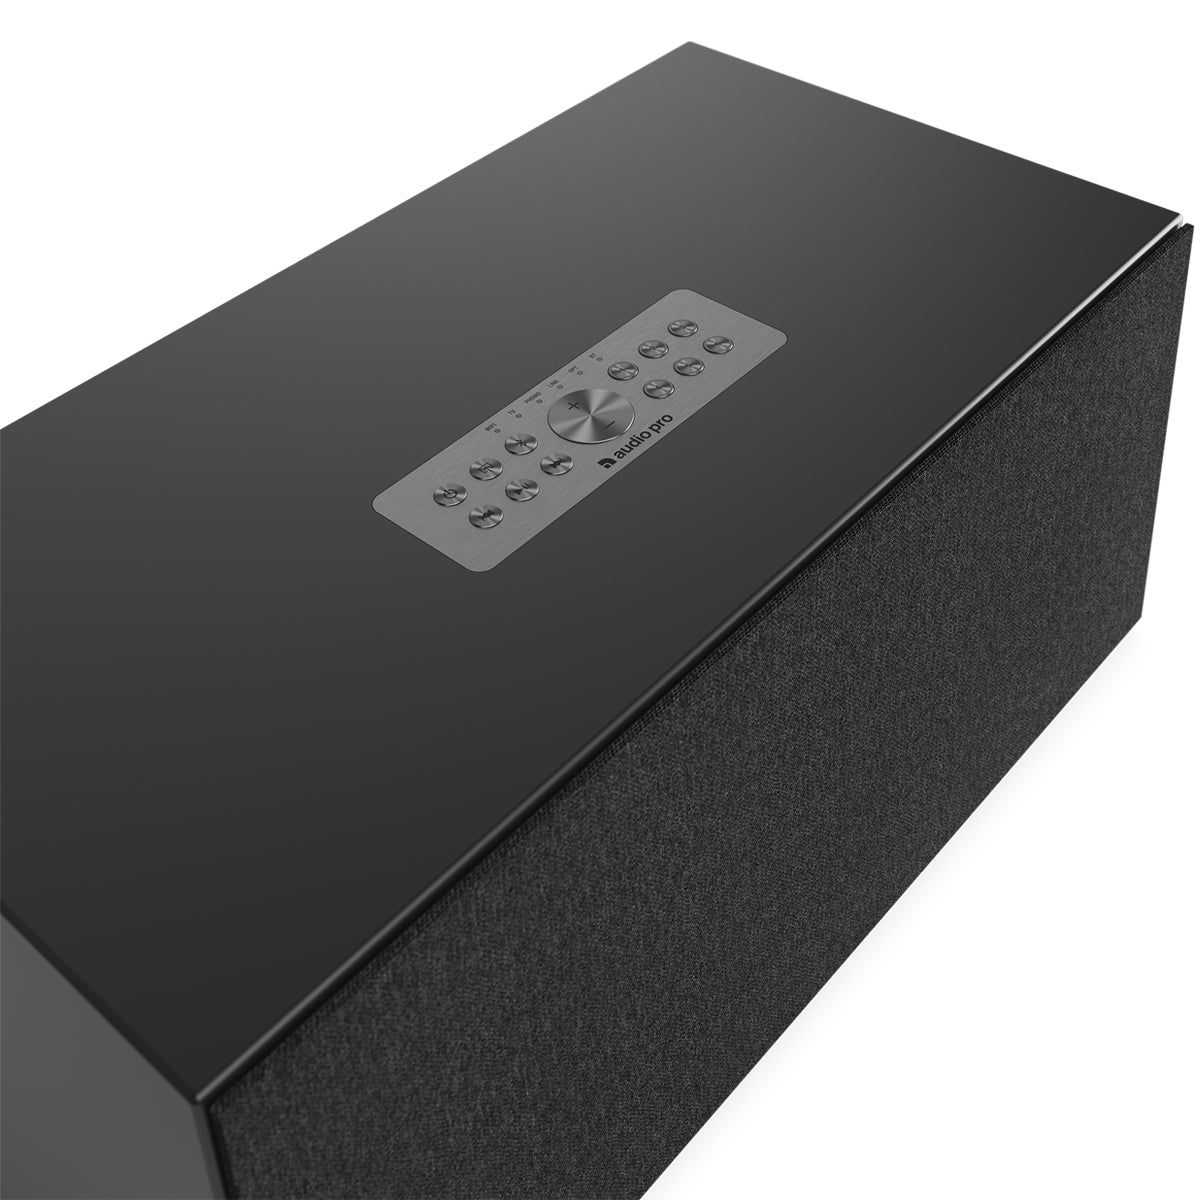 Audio Pro C20 Wireless Multiroom Speaker - Black